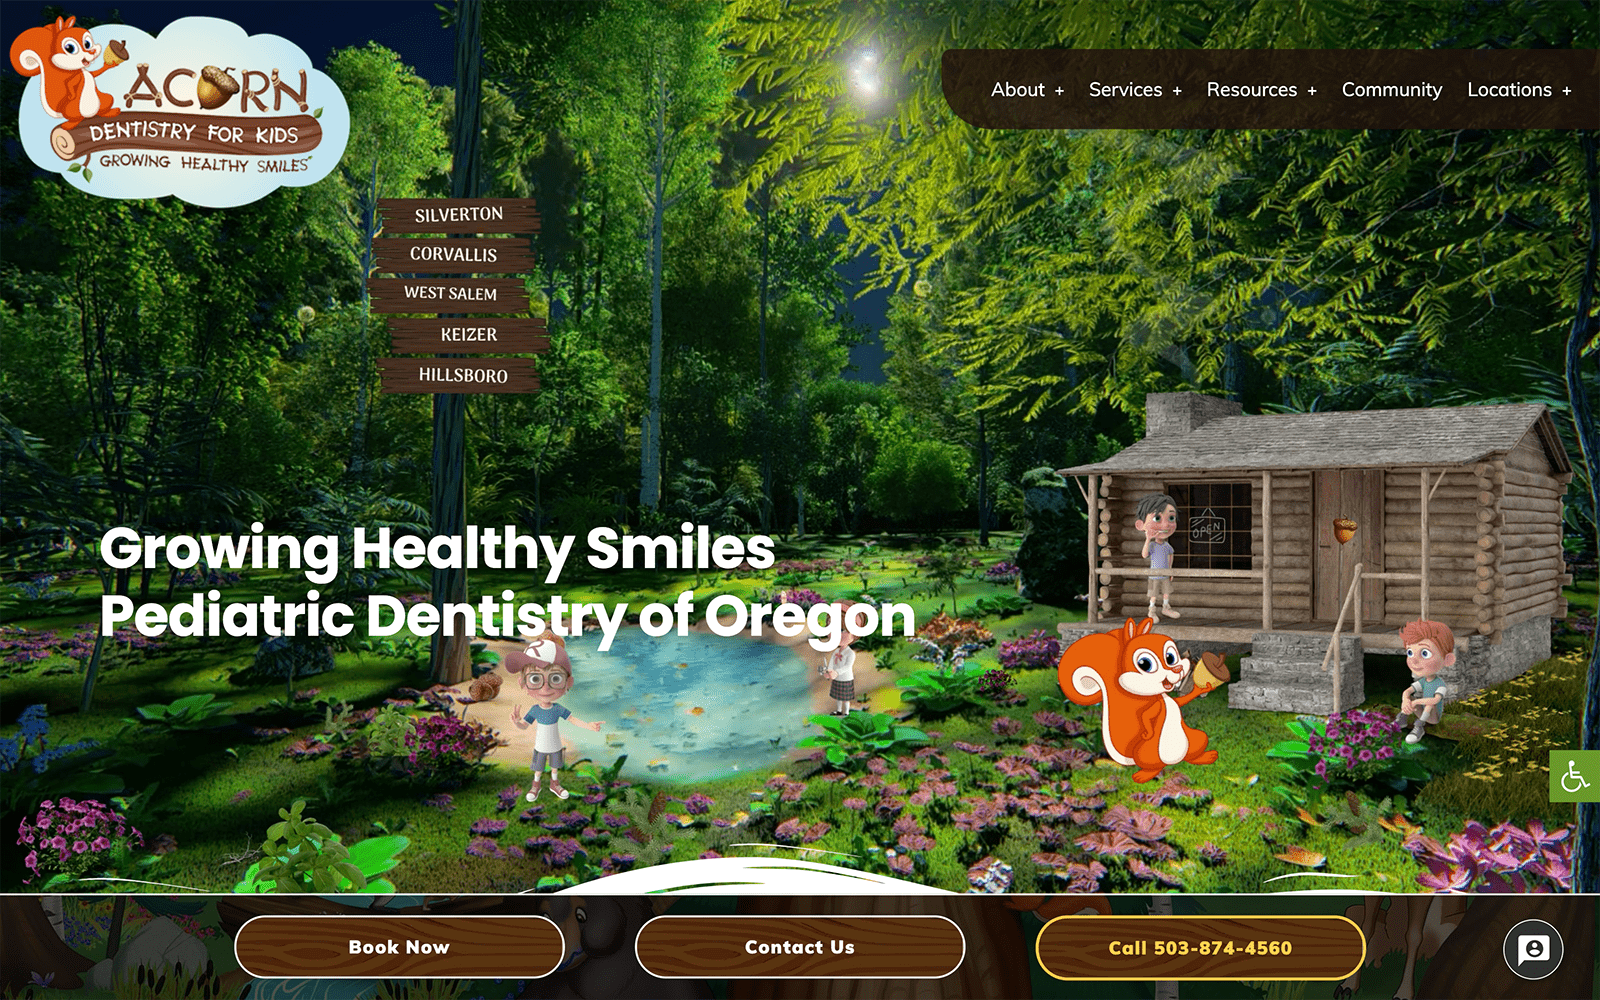 Acorn Dentistry for Kids Website Screenshot